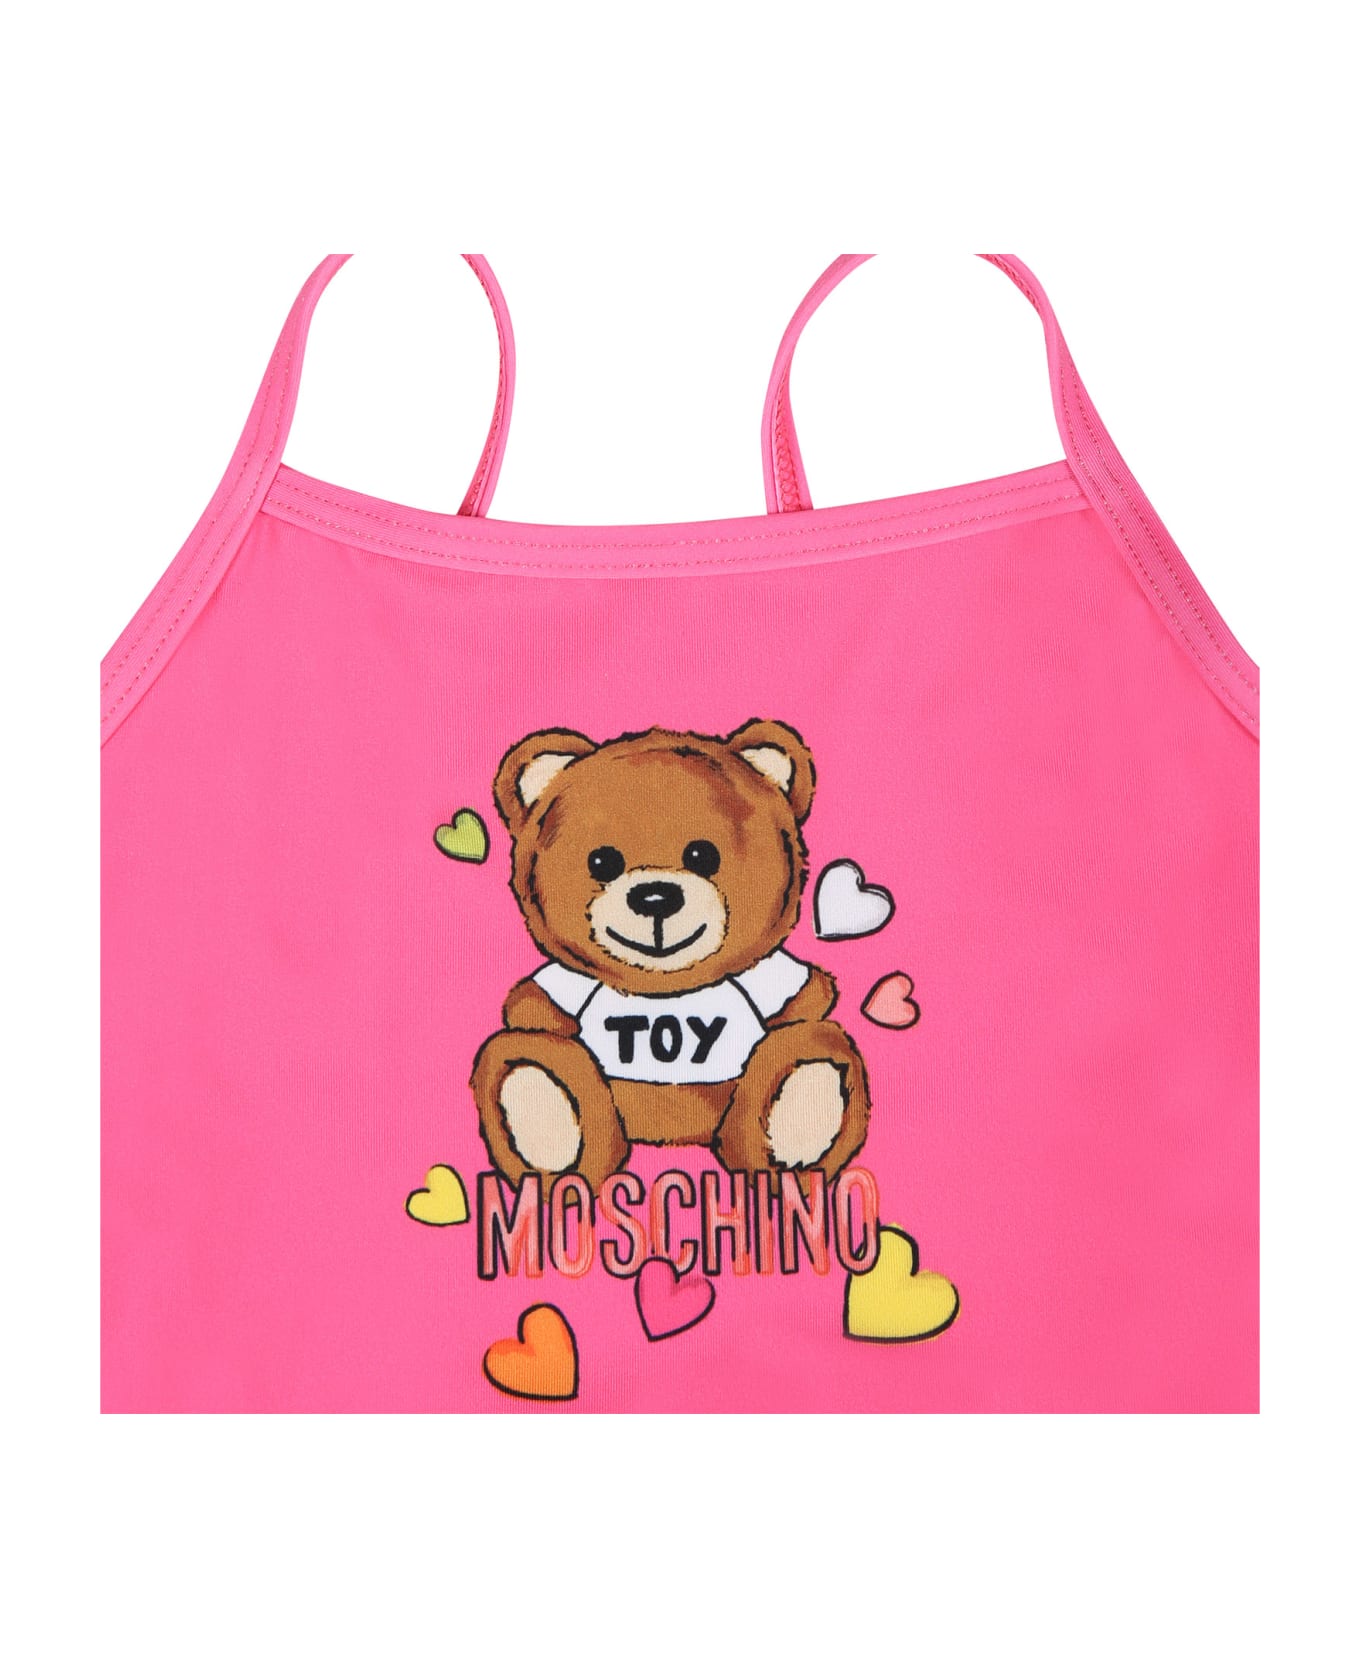 Moschino Fuchsia Swimsuit For Baby Girl With Teddy Bear And Logo - Fuchsia